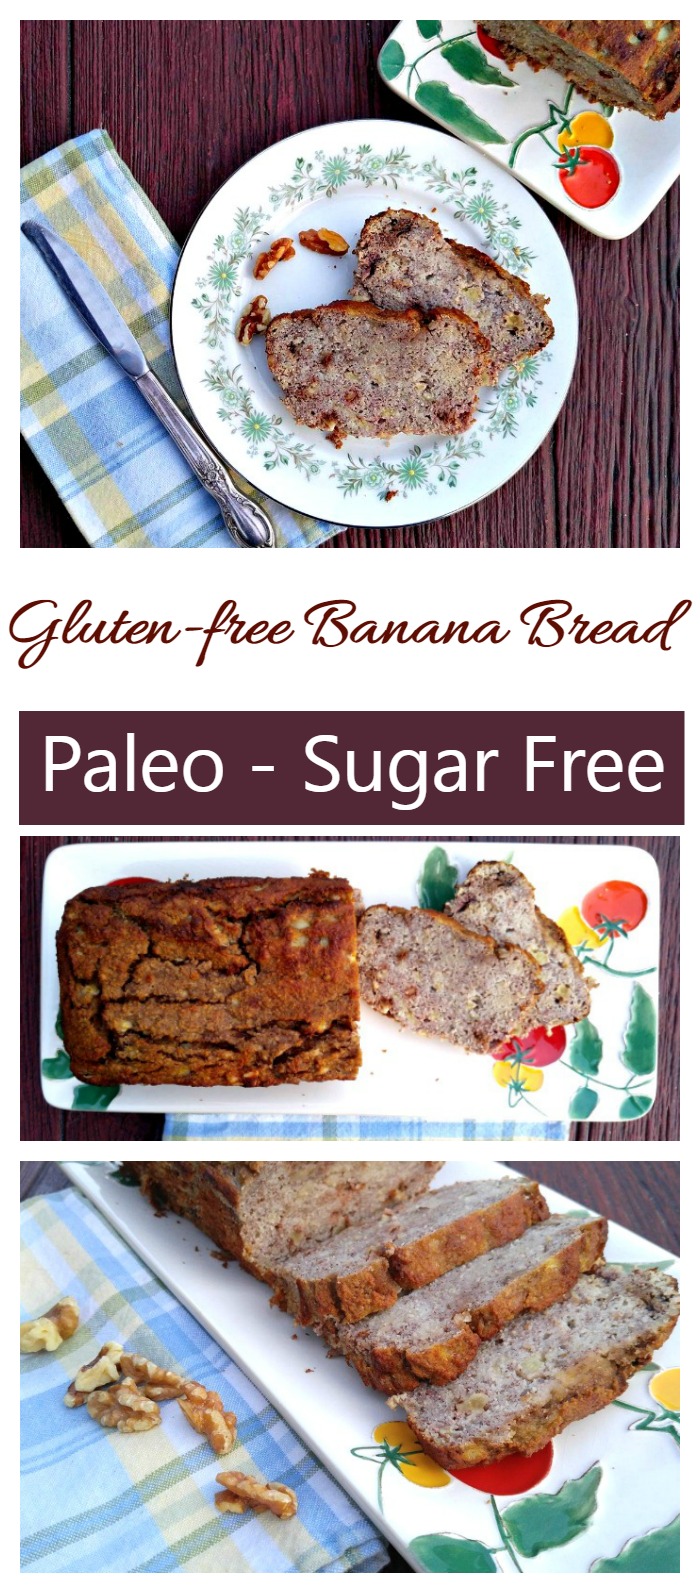 Gluten Free Banana Bread - Paleo - Sugar Free - Clean Eating